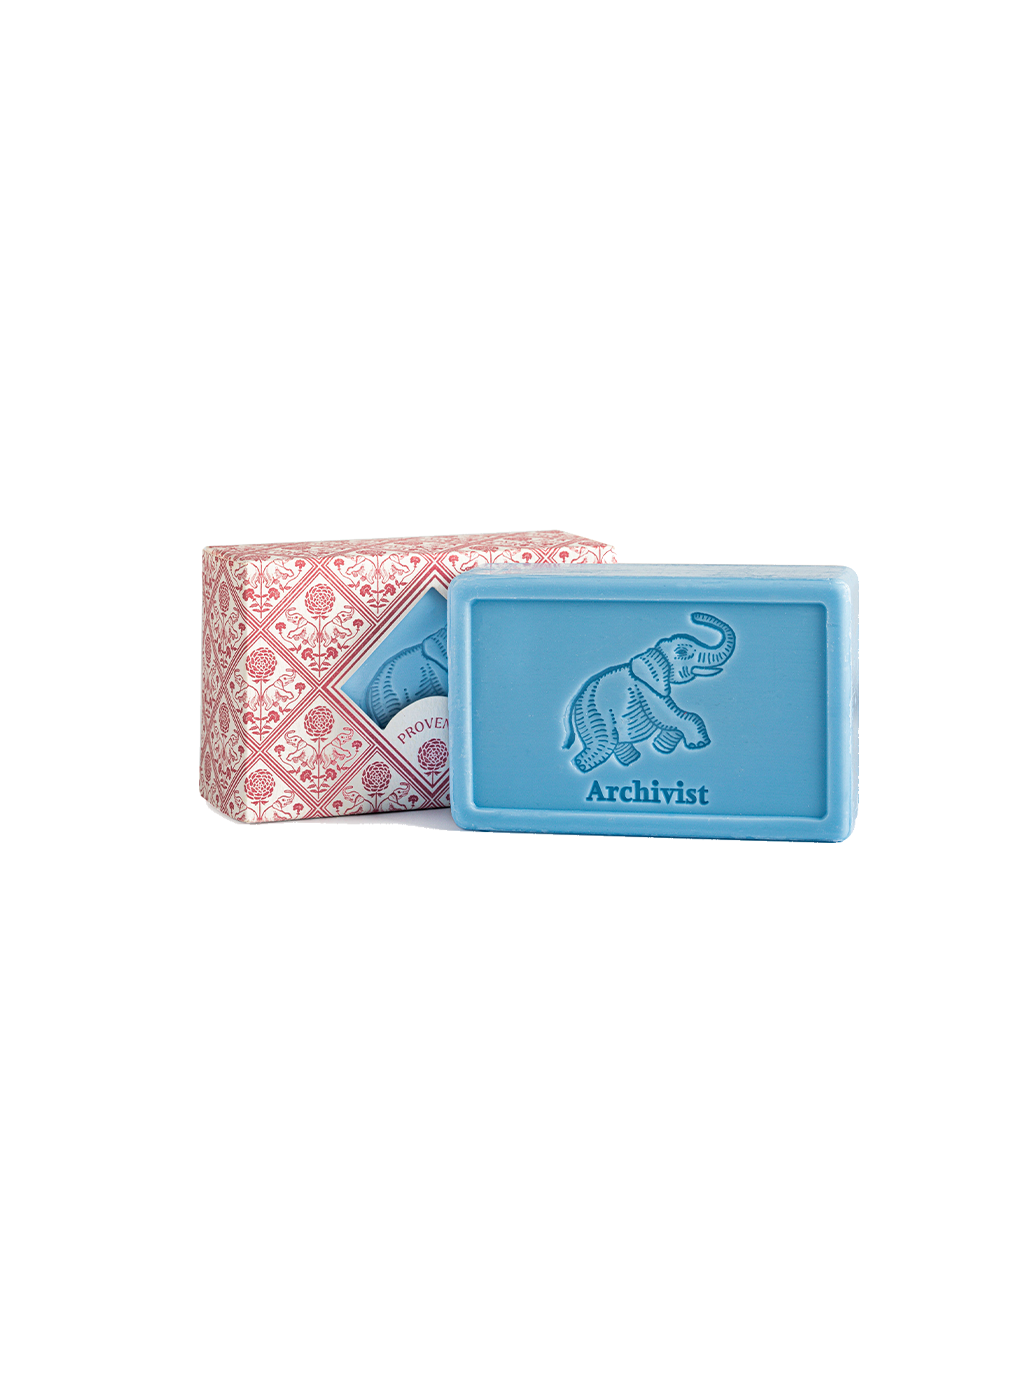 Provencal Elephant Soap hand soap